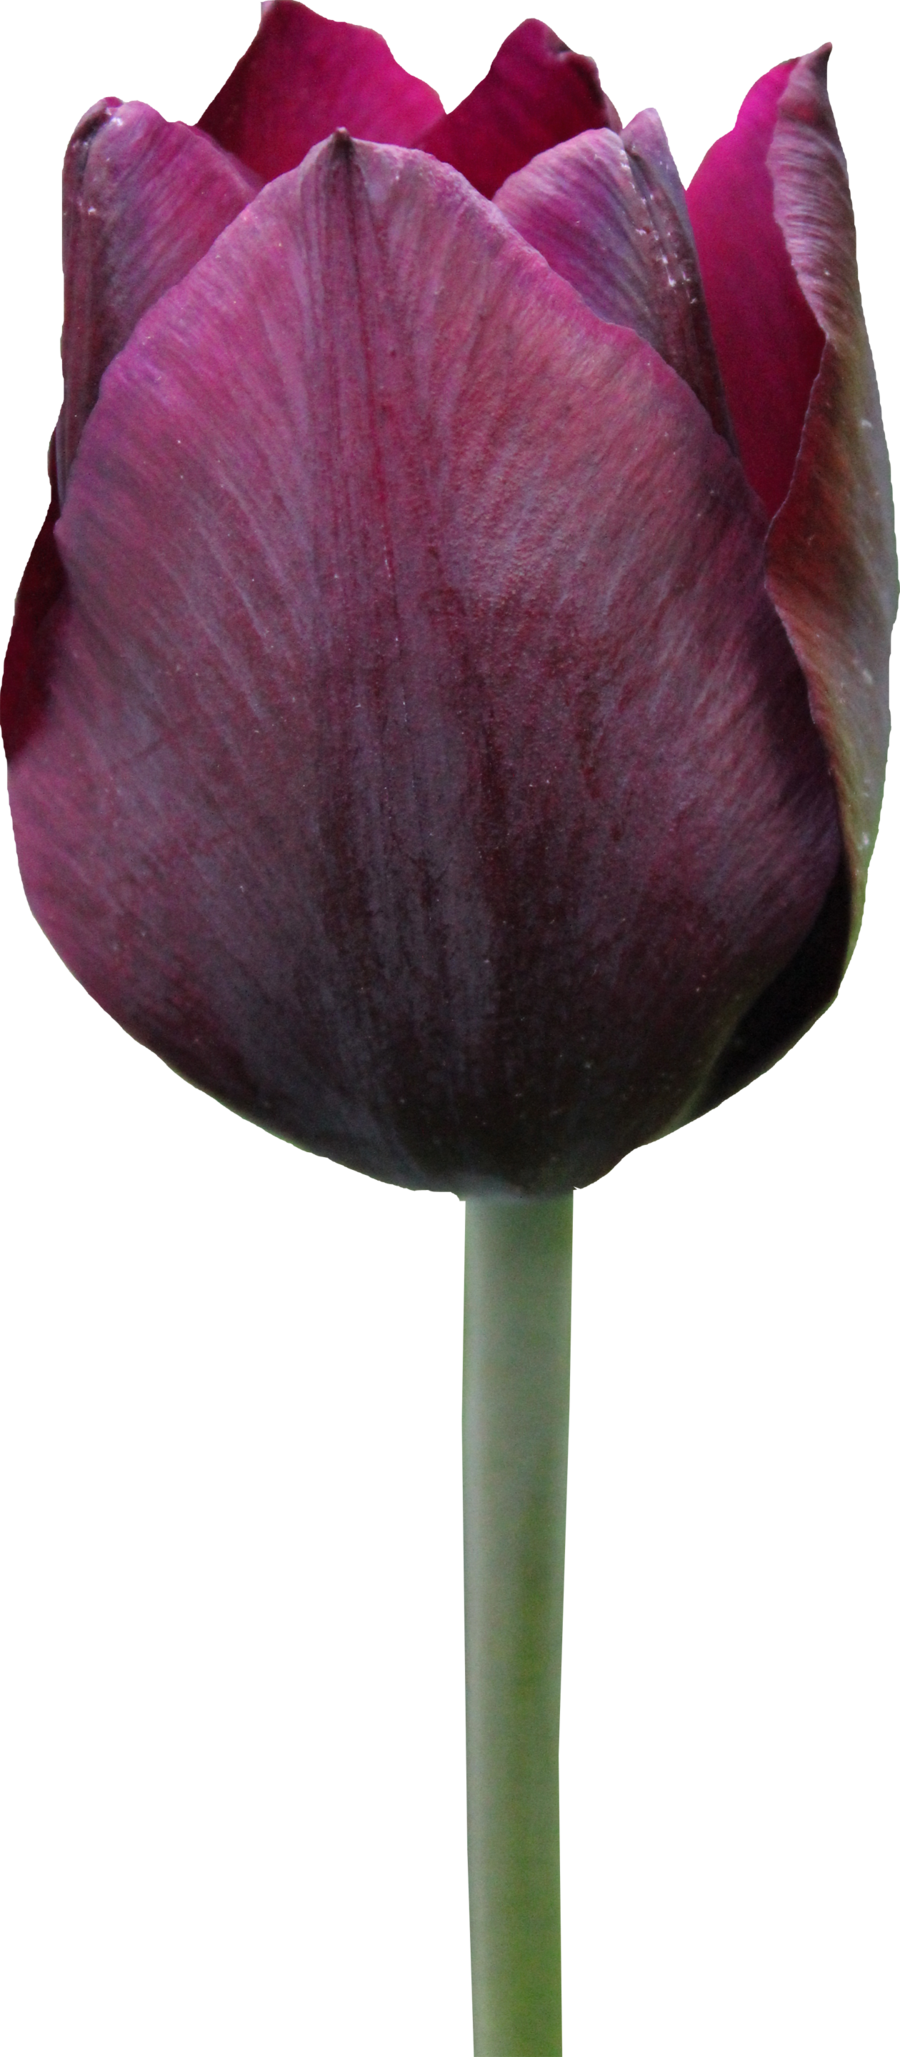 A Close Up Of A Flower